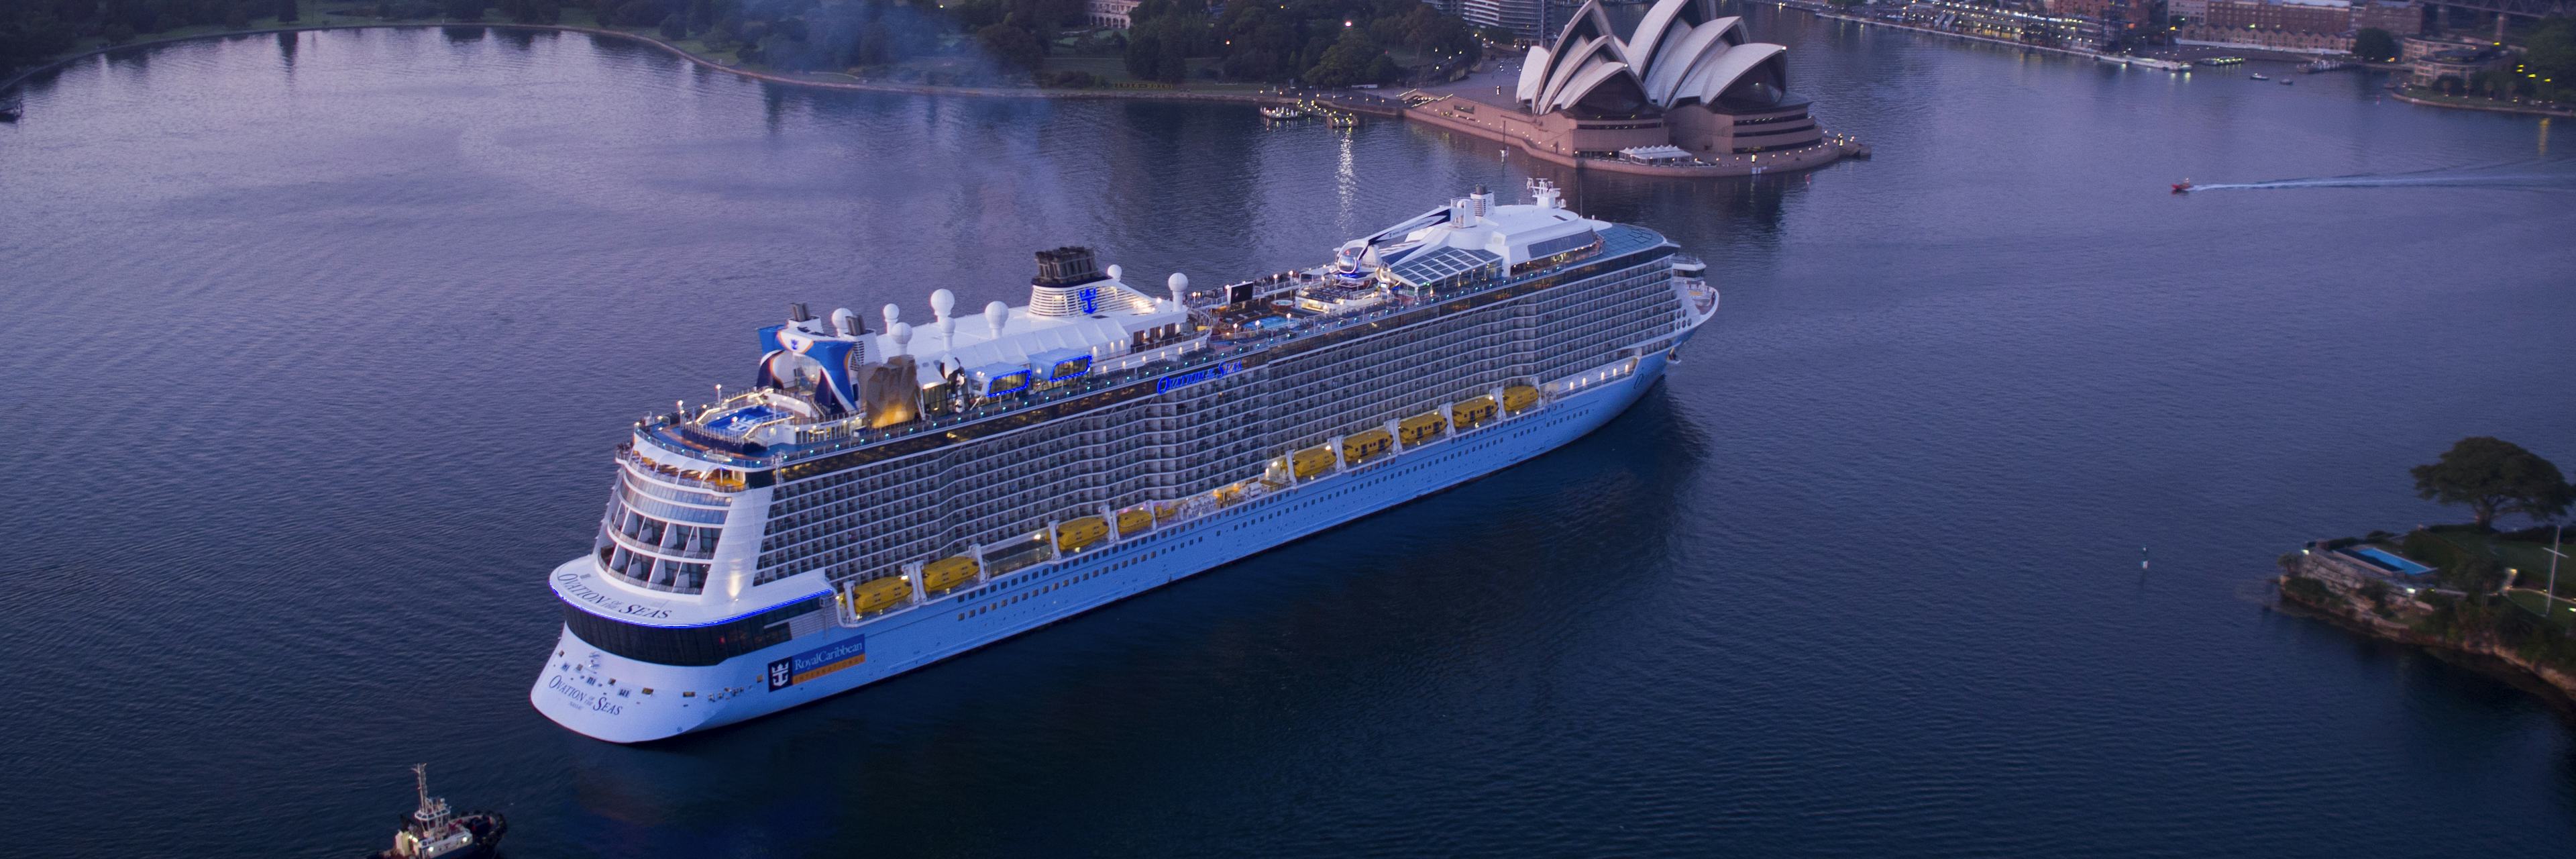 Royal Caribbean Cruise in Sydney, Australia 